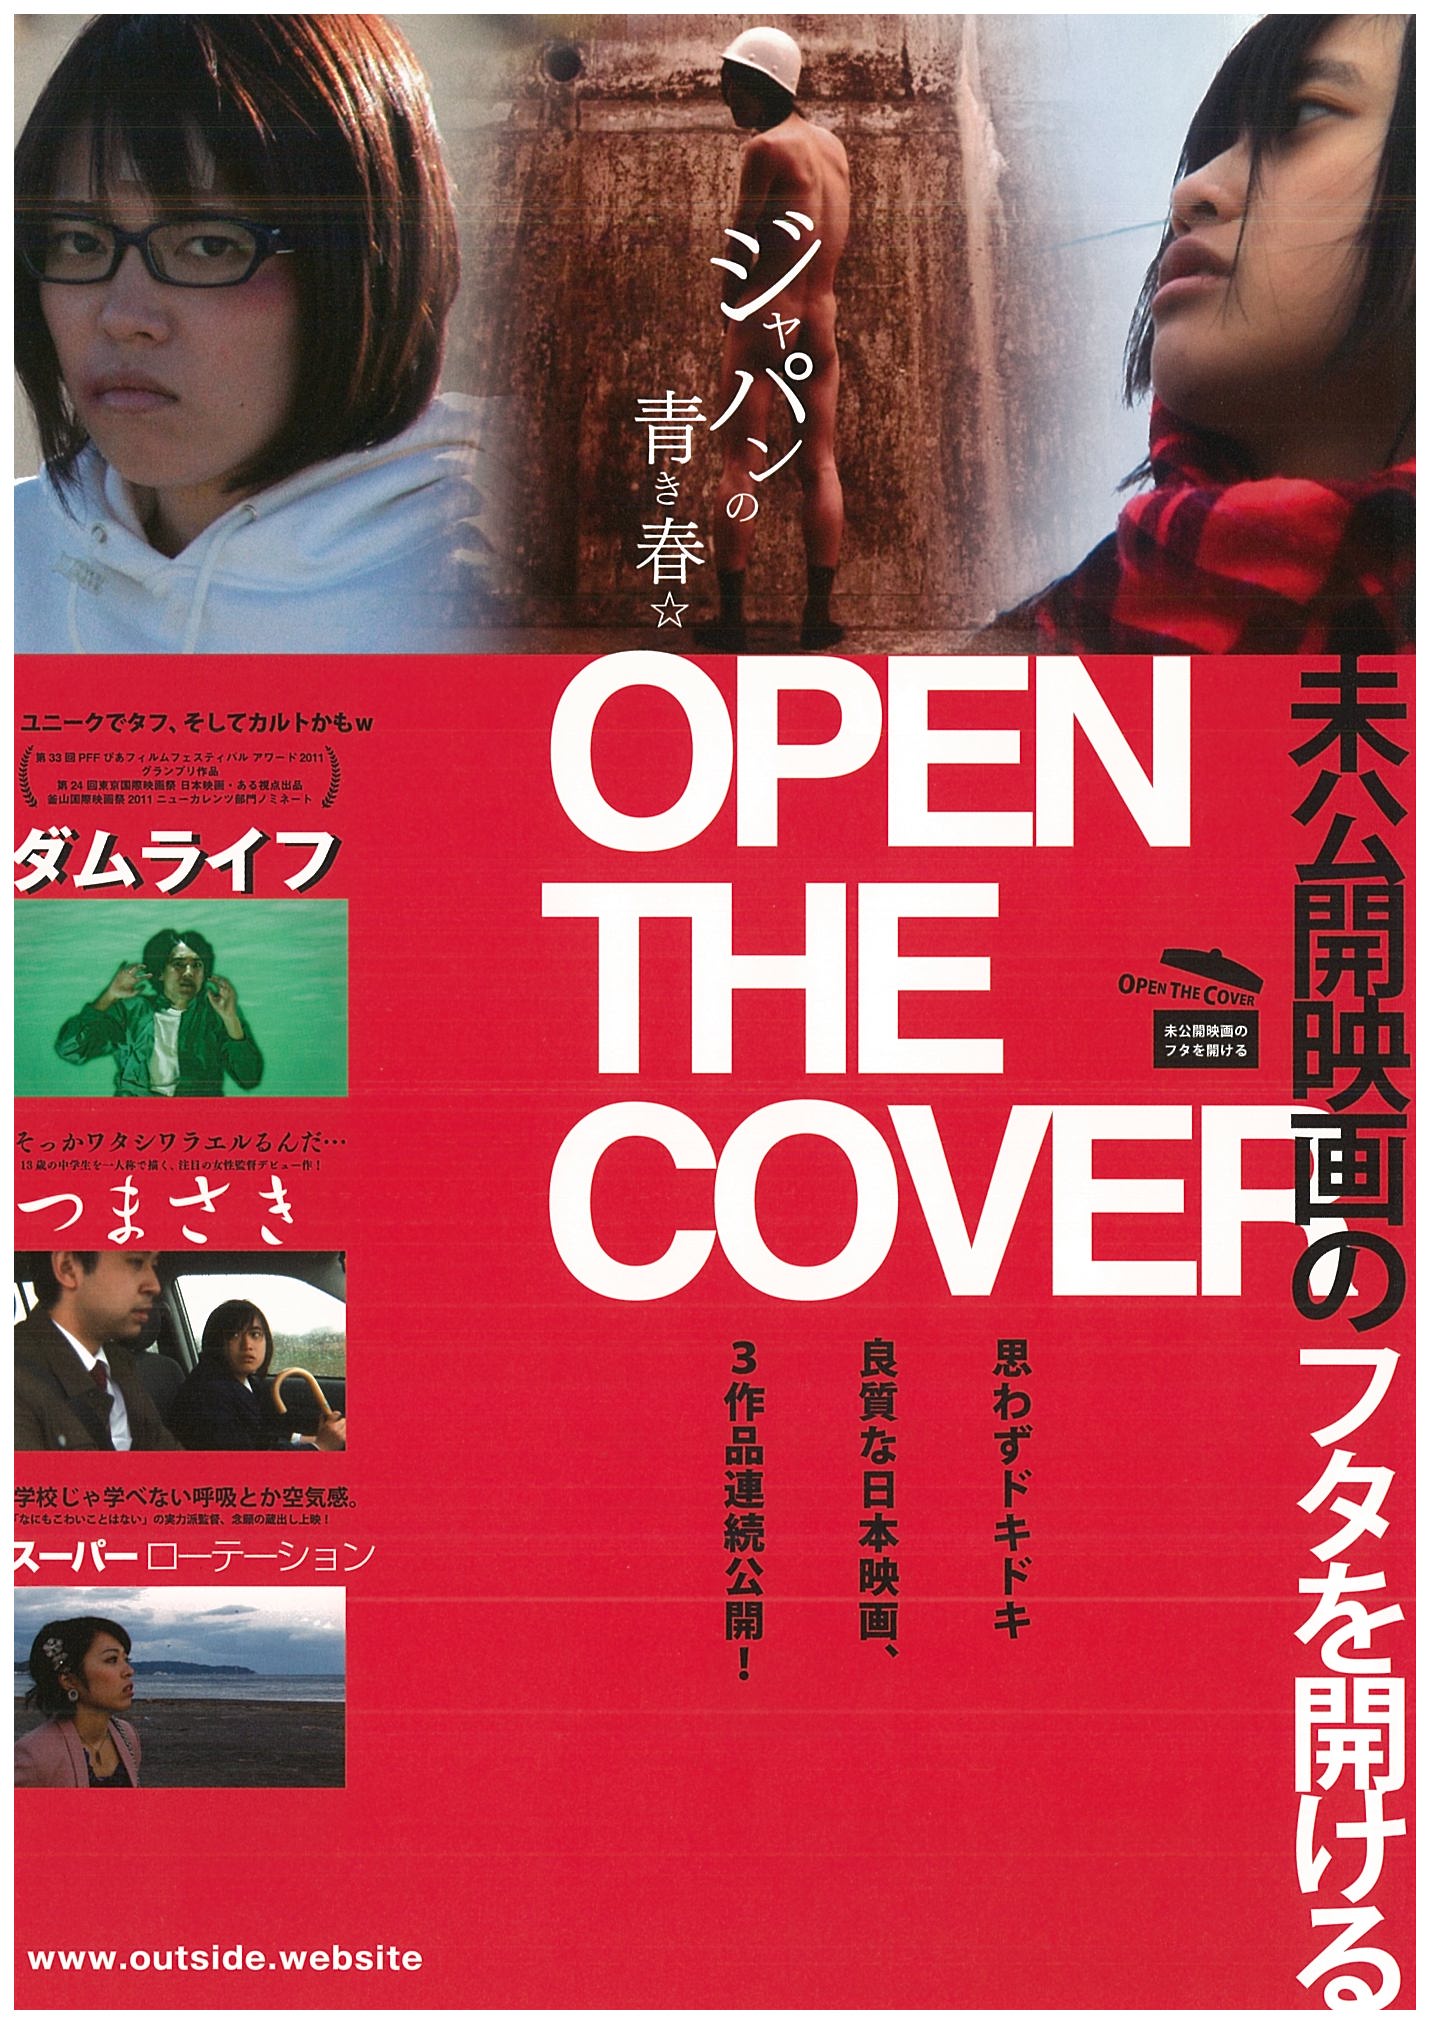 openthecover_flyer.jpg